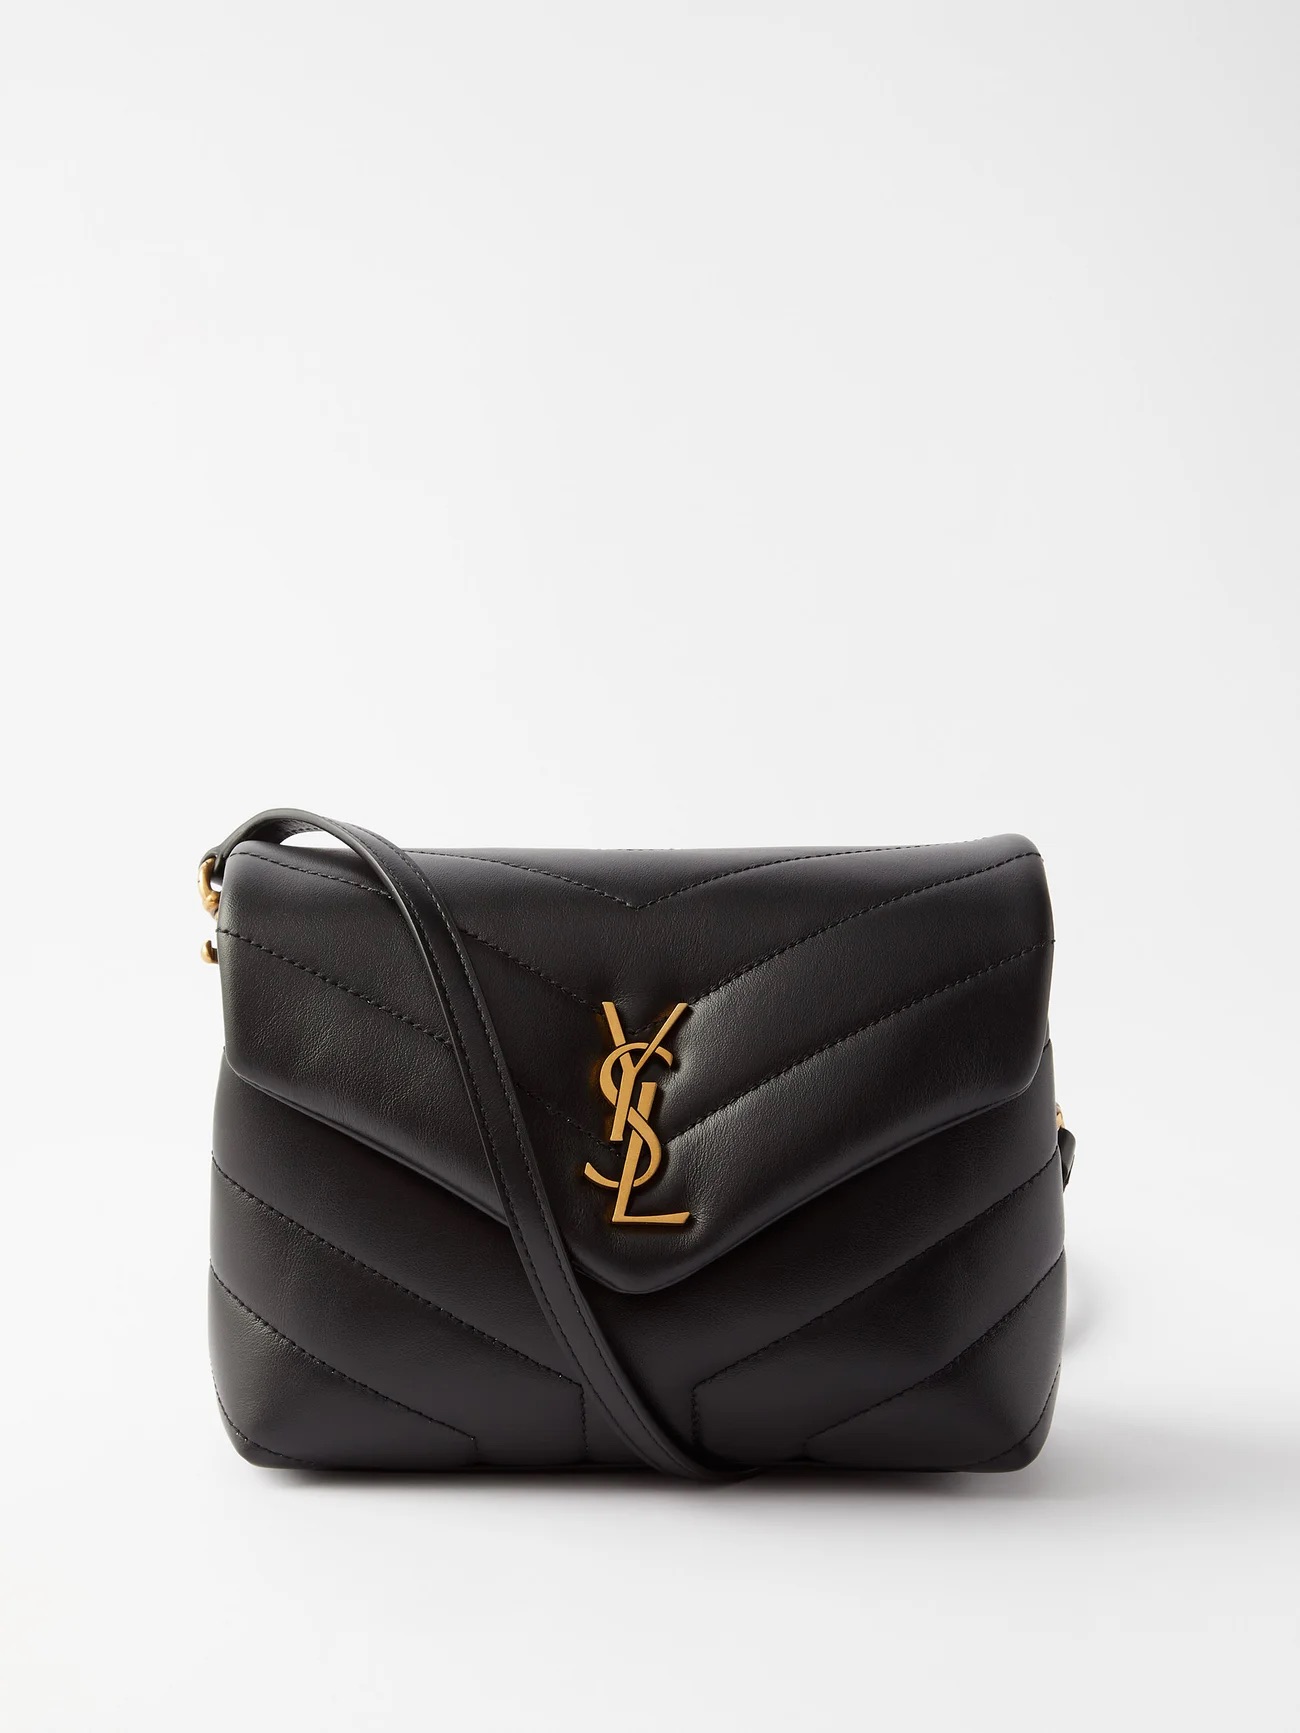 crossbody black designer bag